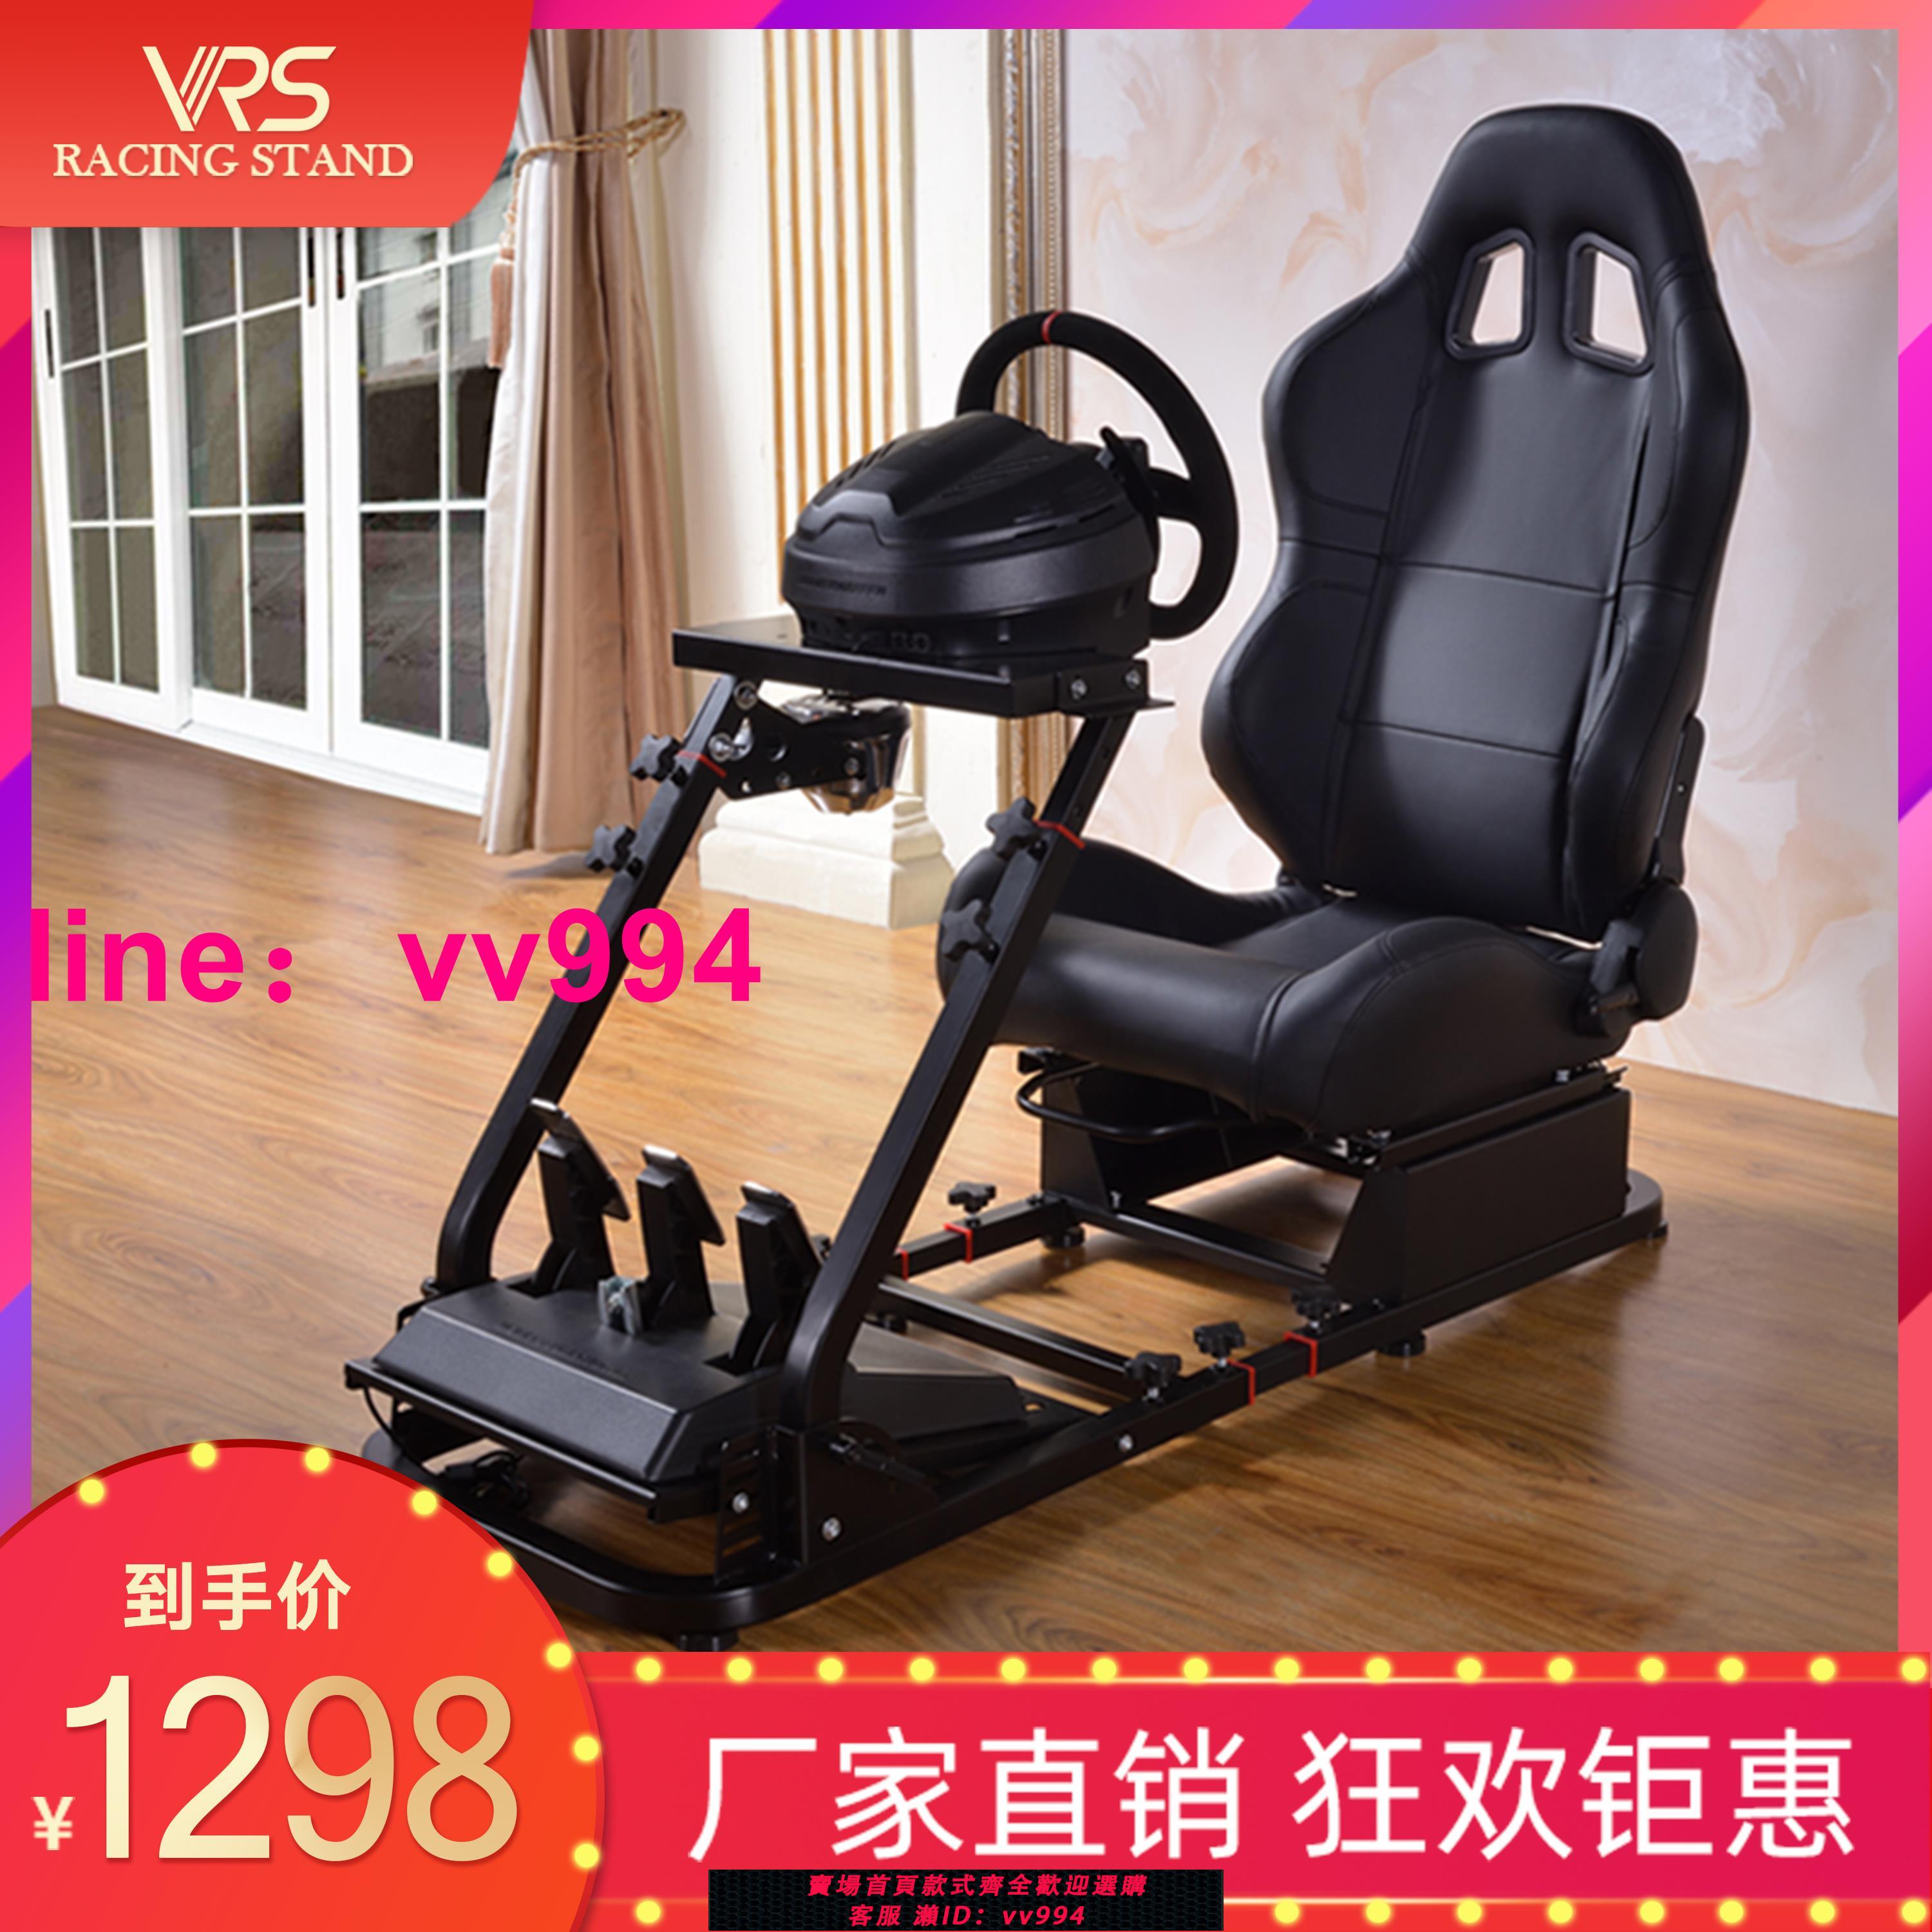 VRS模擬賽車游戲座椅支架后部g29g920g923g27t300rs速魔ps5顯示器